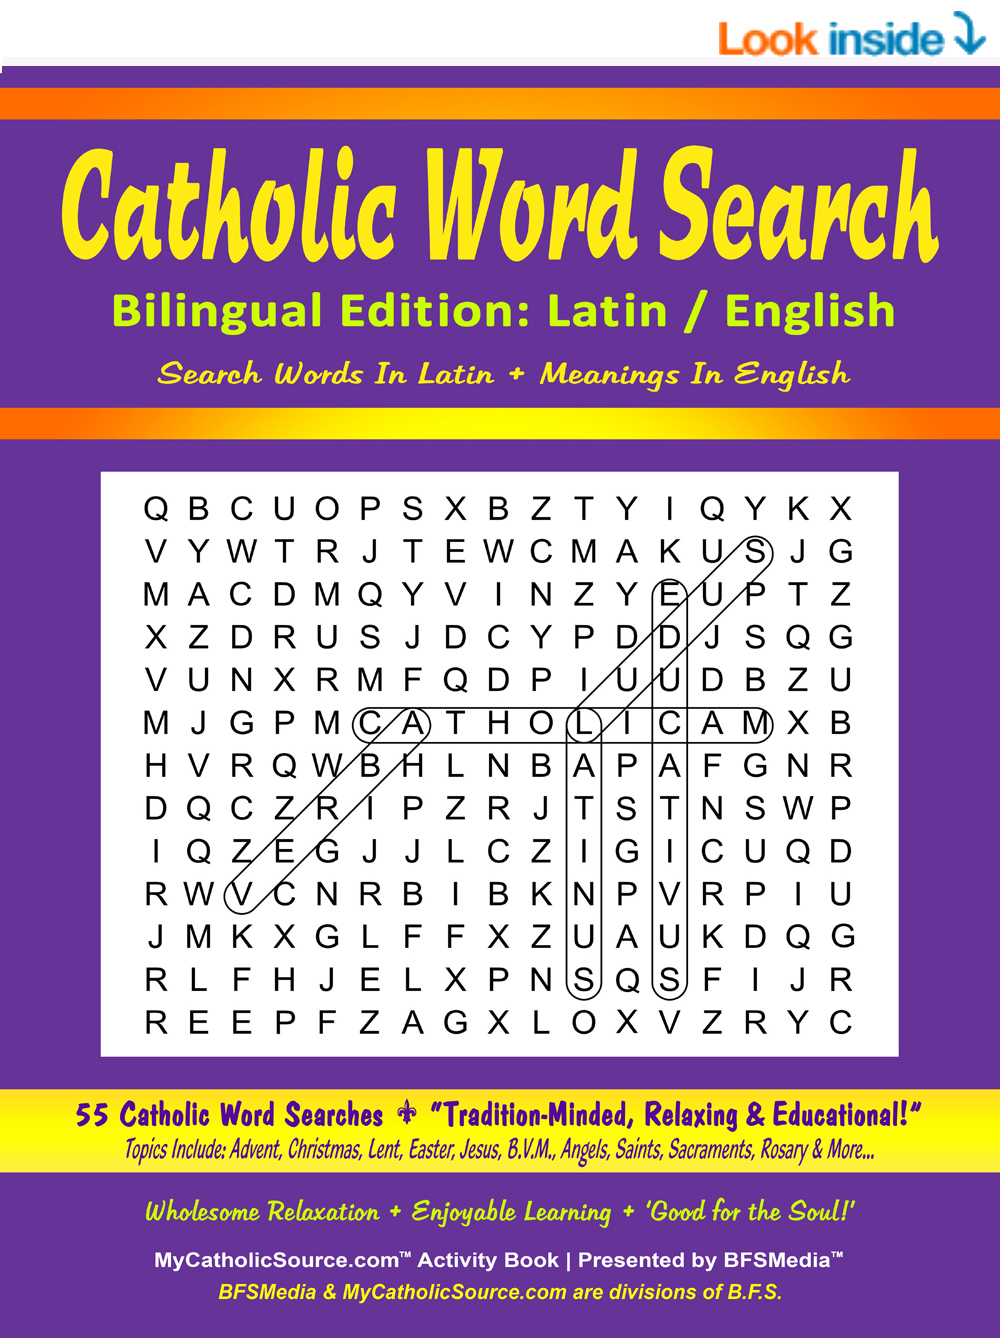 Catholic Word Search - Bilingual Edition: Latin / English